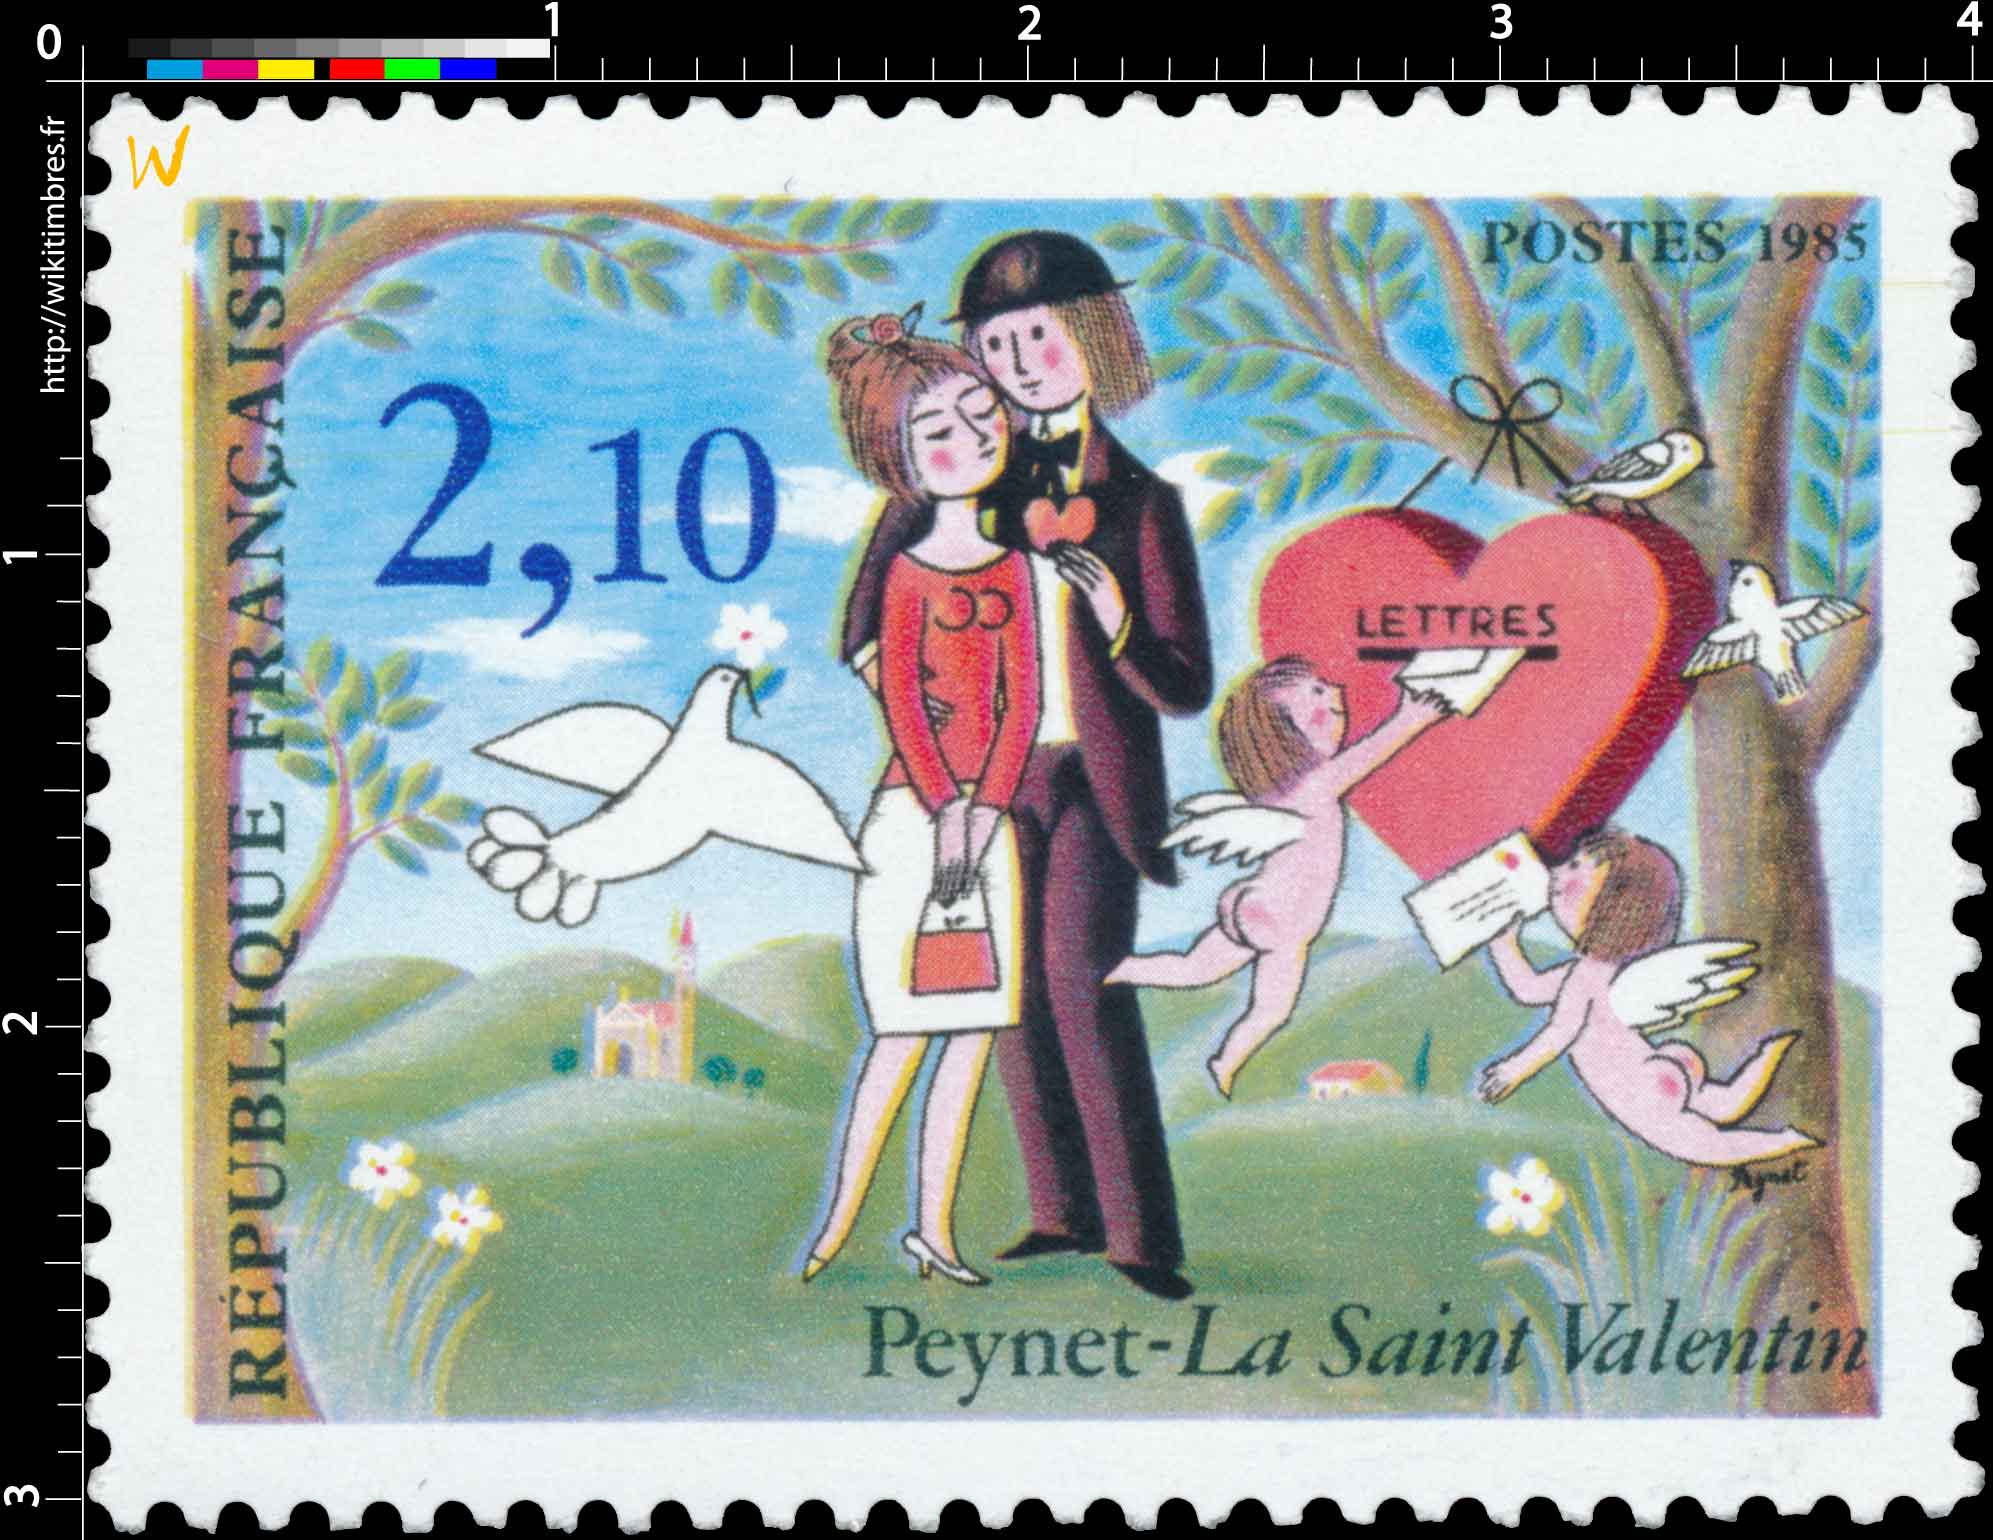 1985 Peynet - La Saint Valentin